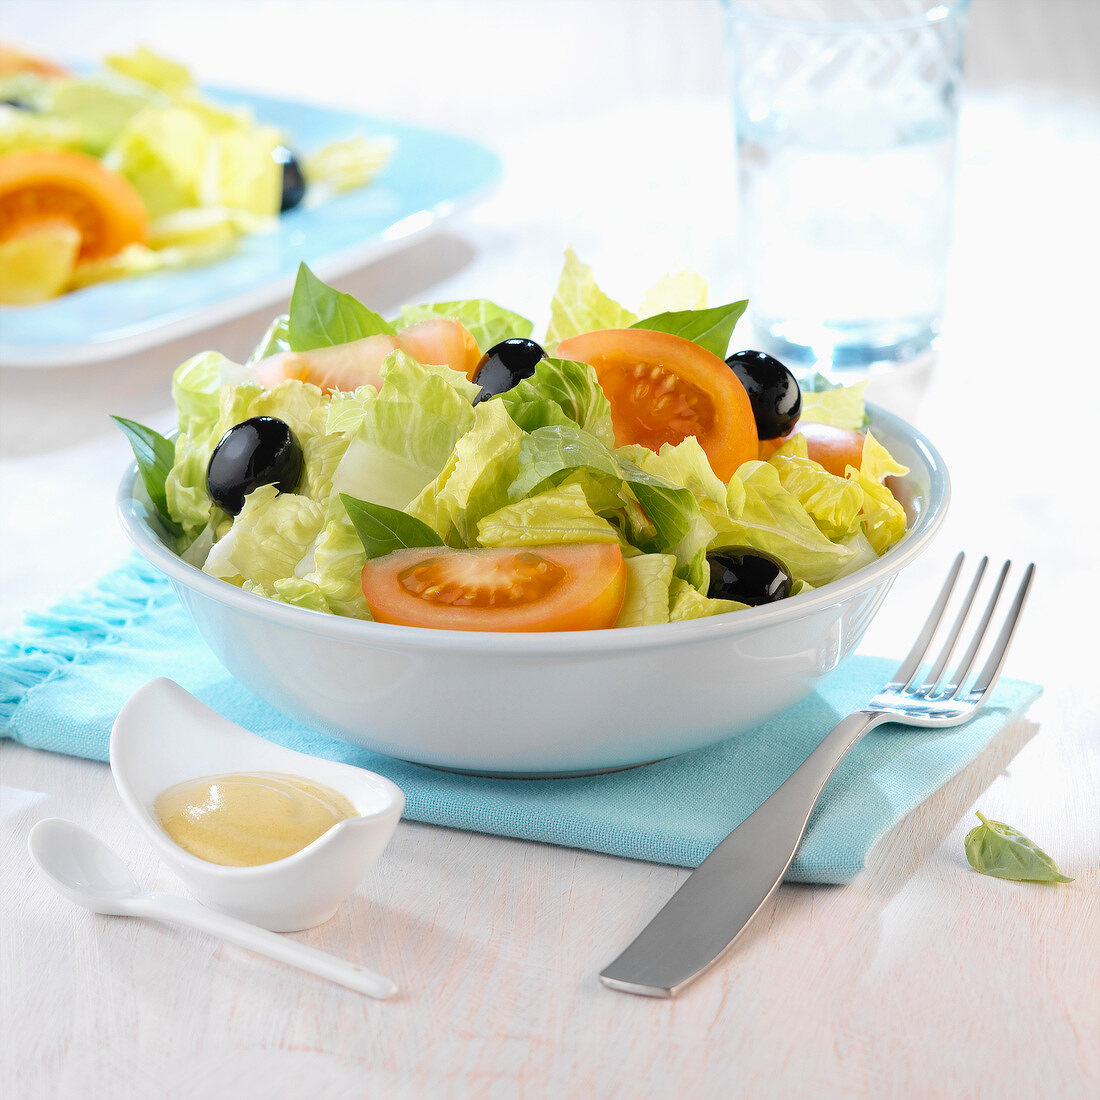 Lettuce, black olive and tomato salad